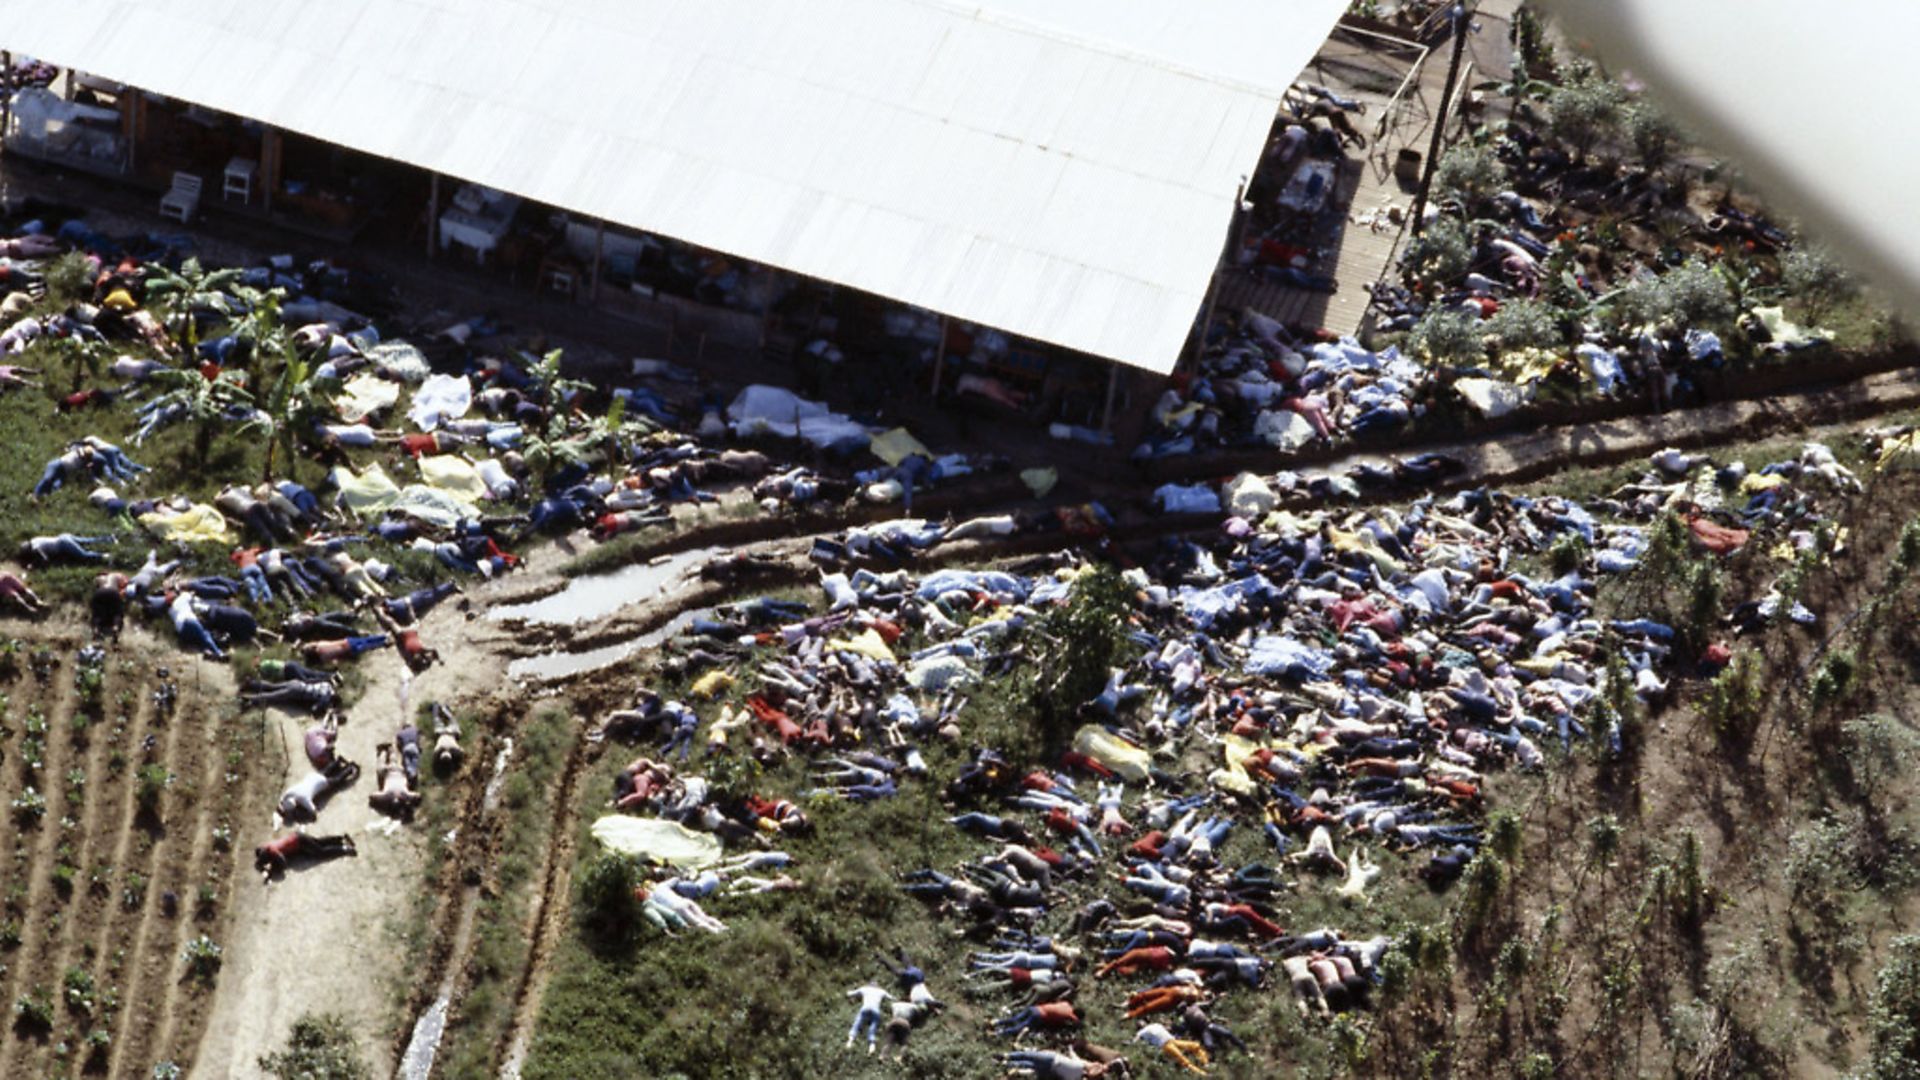 social psychology case study the jonestown massacre